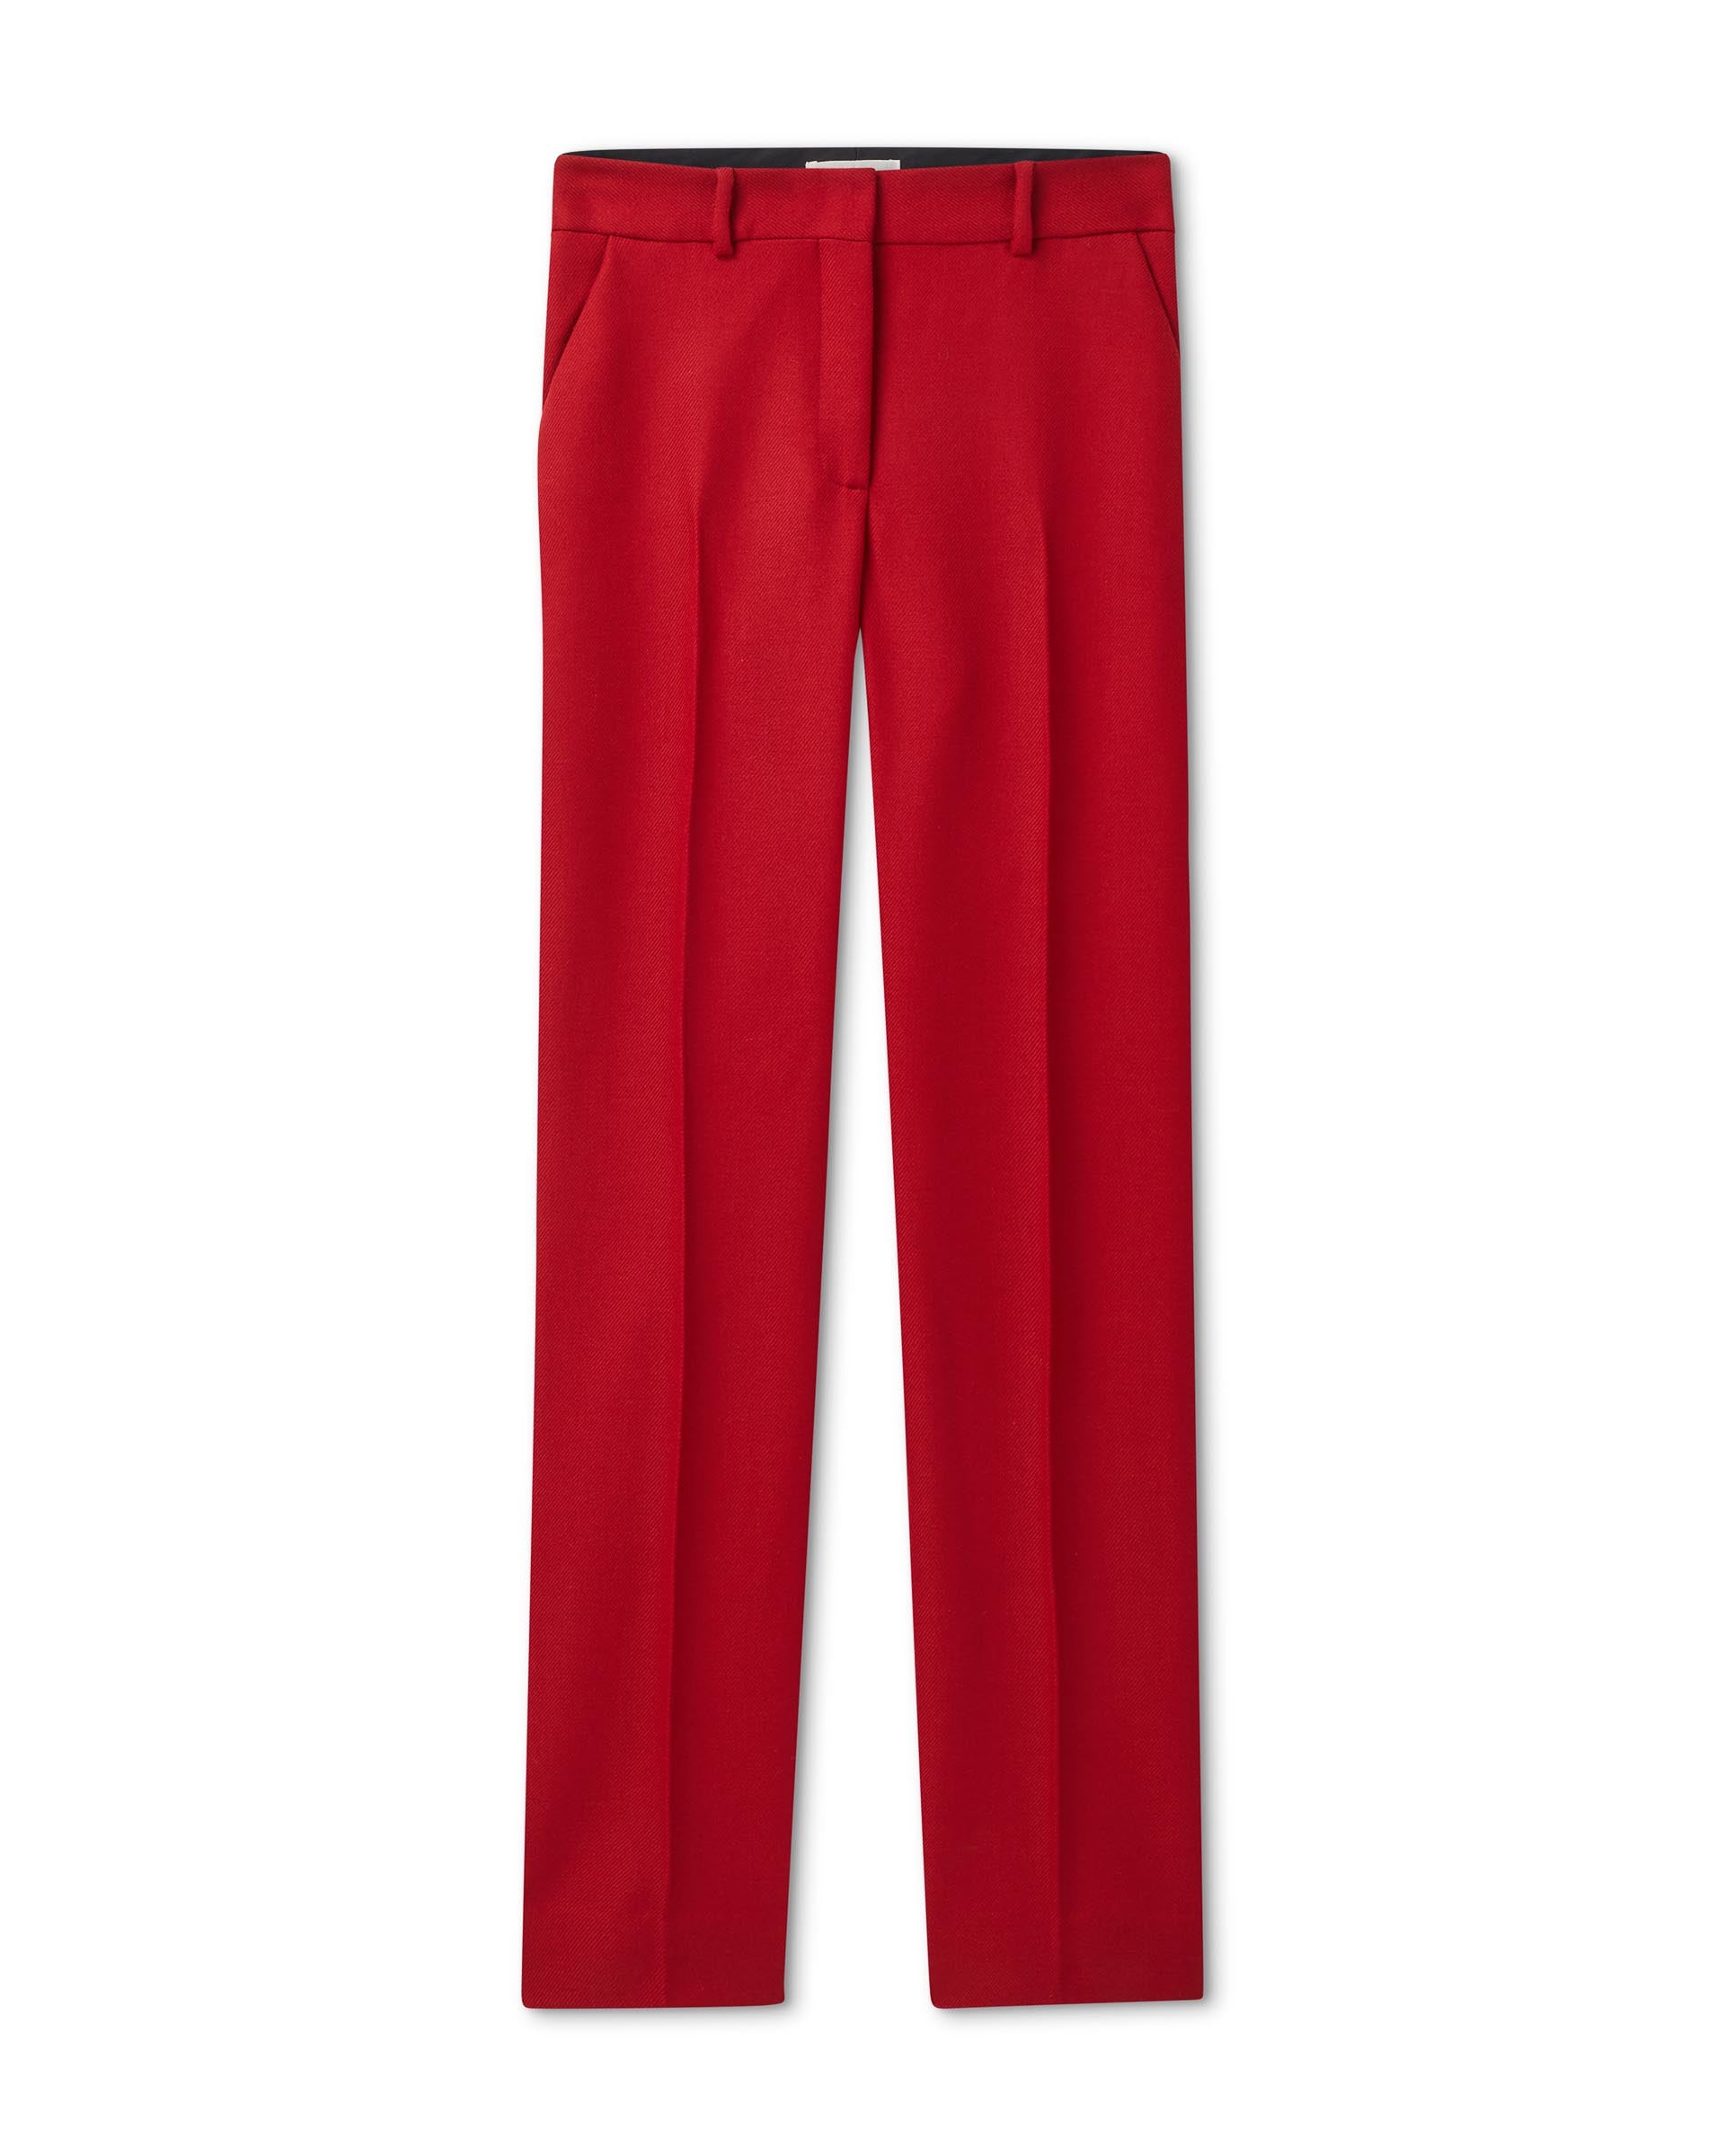 Corduroy Trousers for Girls, Dark Red | Zippy Online